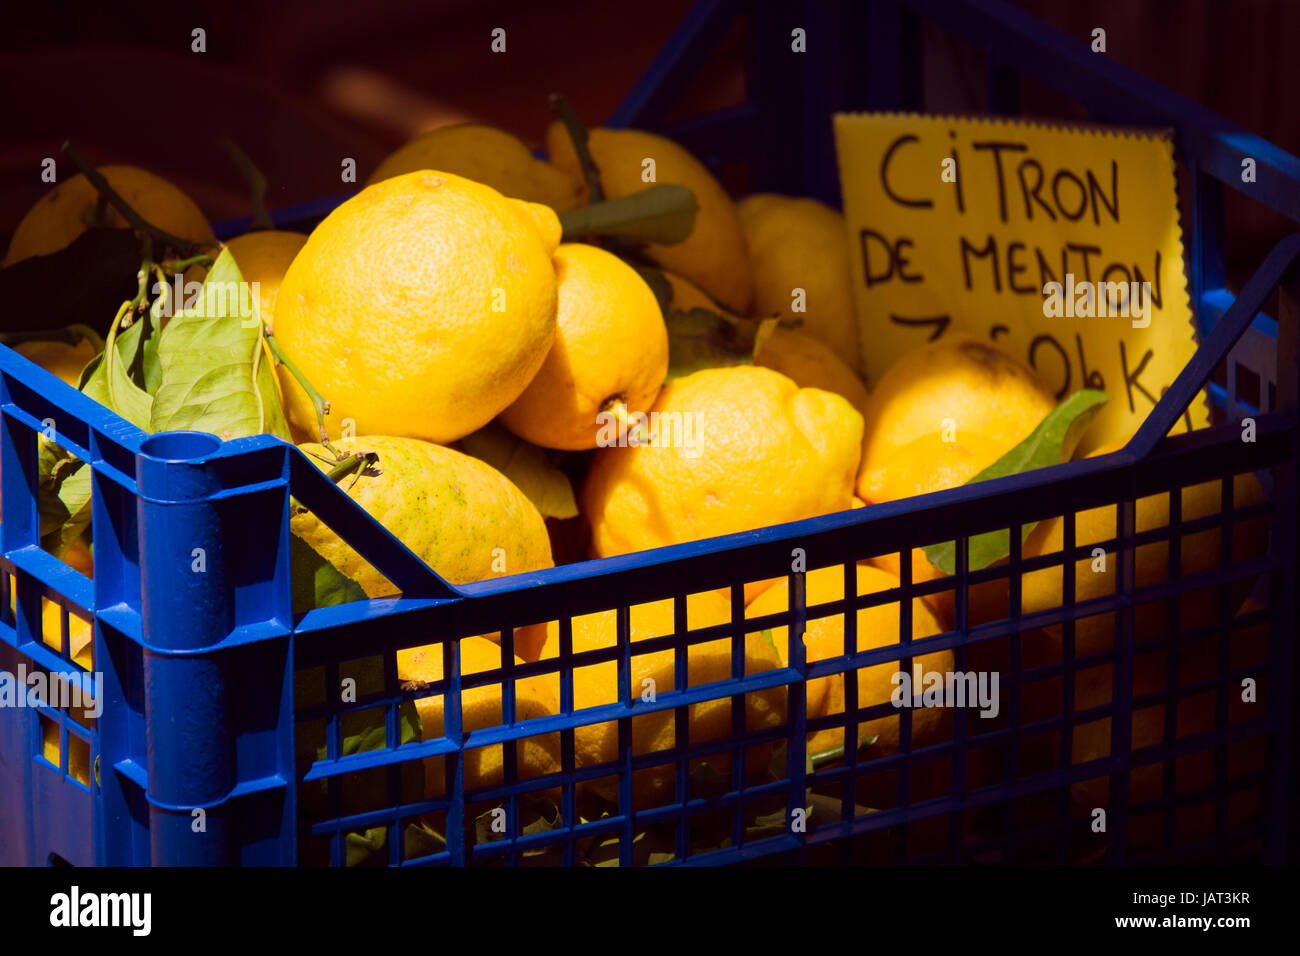 Lemons on sale in a market in Menton, France Stock Photo